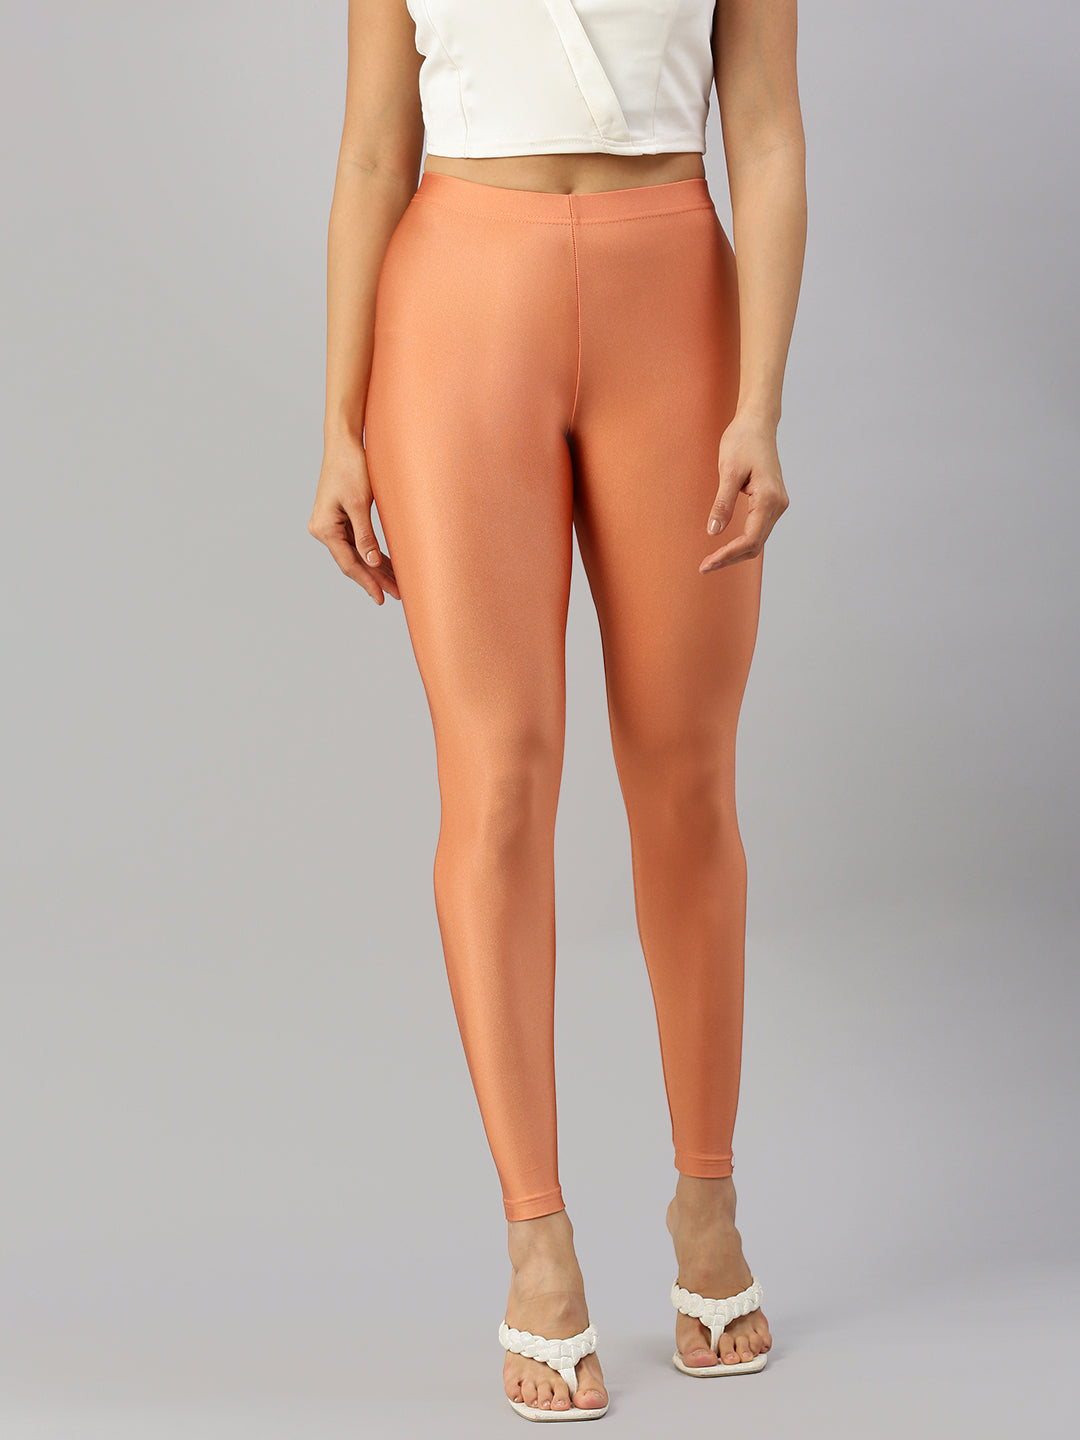 Prisma's Copper Shimmer Leggings for a Dazzling Look